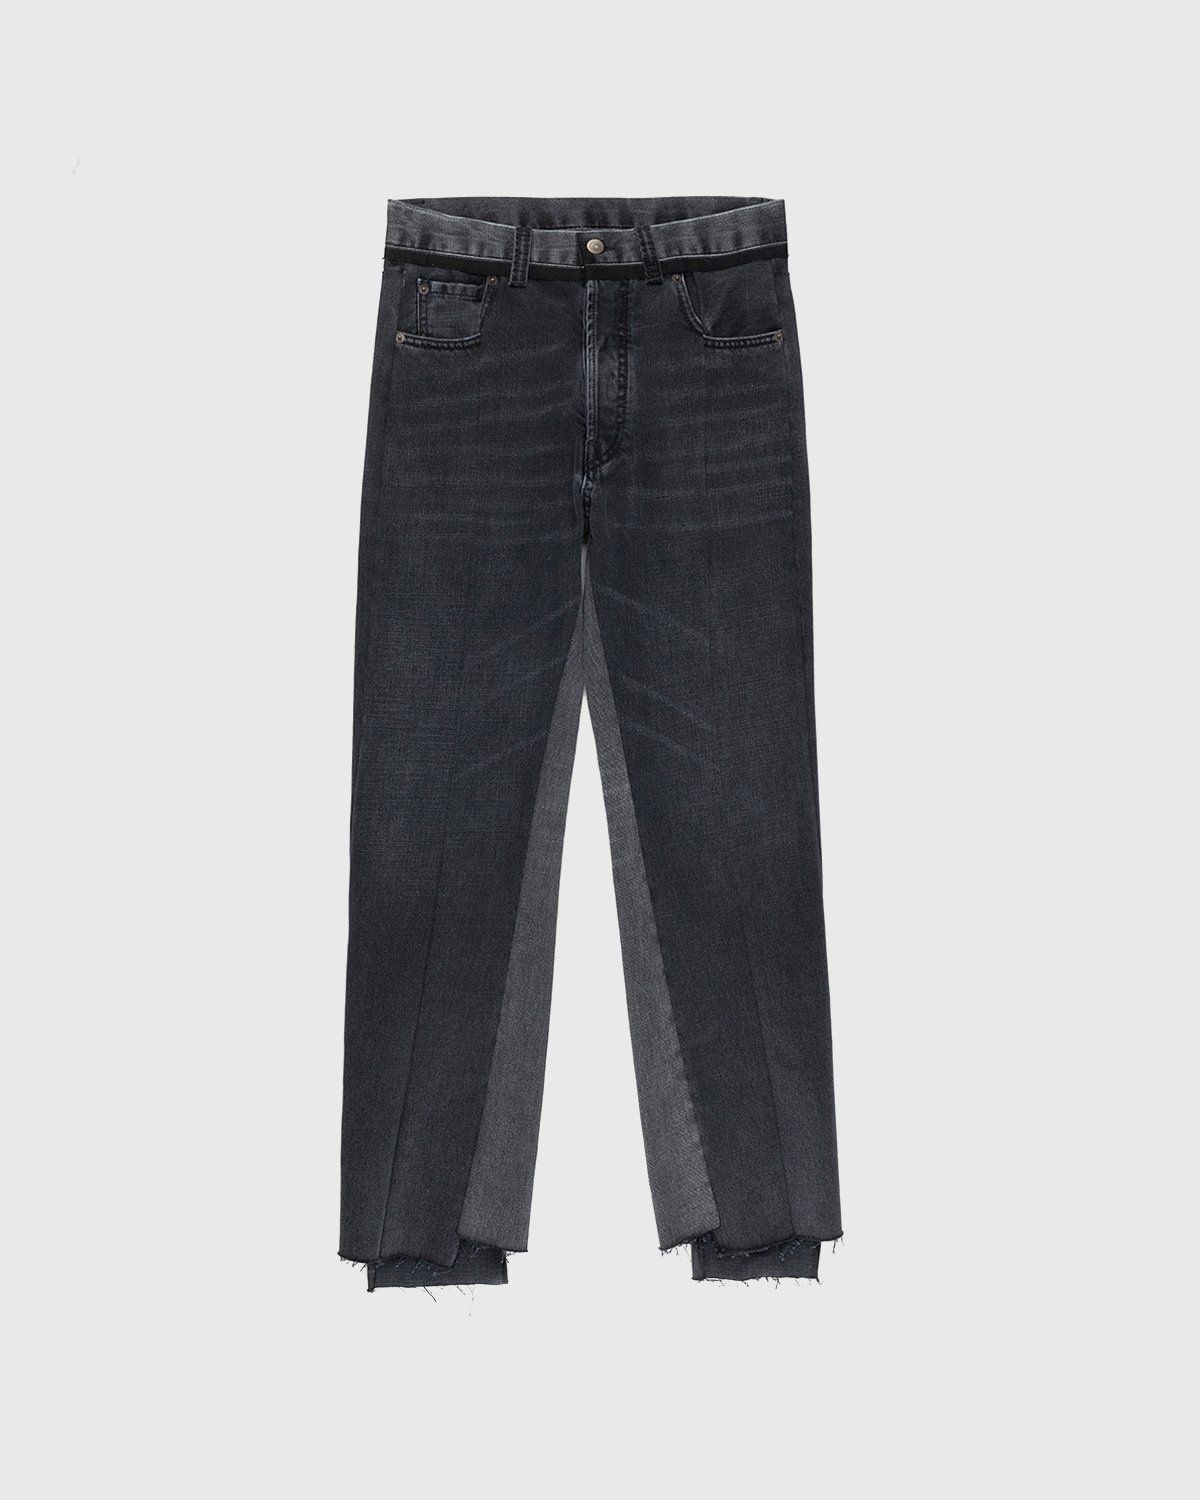 Maison Margiela – Spliced Jeans Black - Denim - Black - Image 1